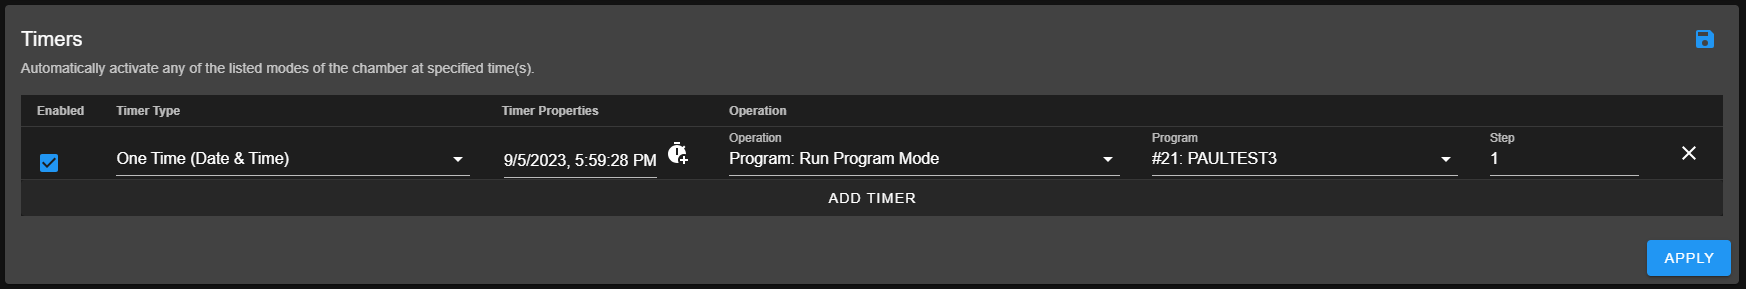 Program mode for a one-time start